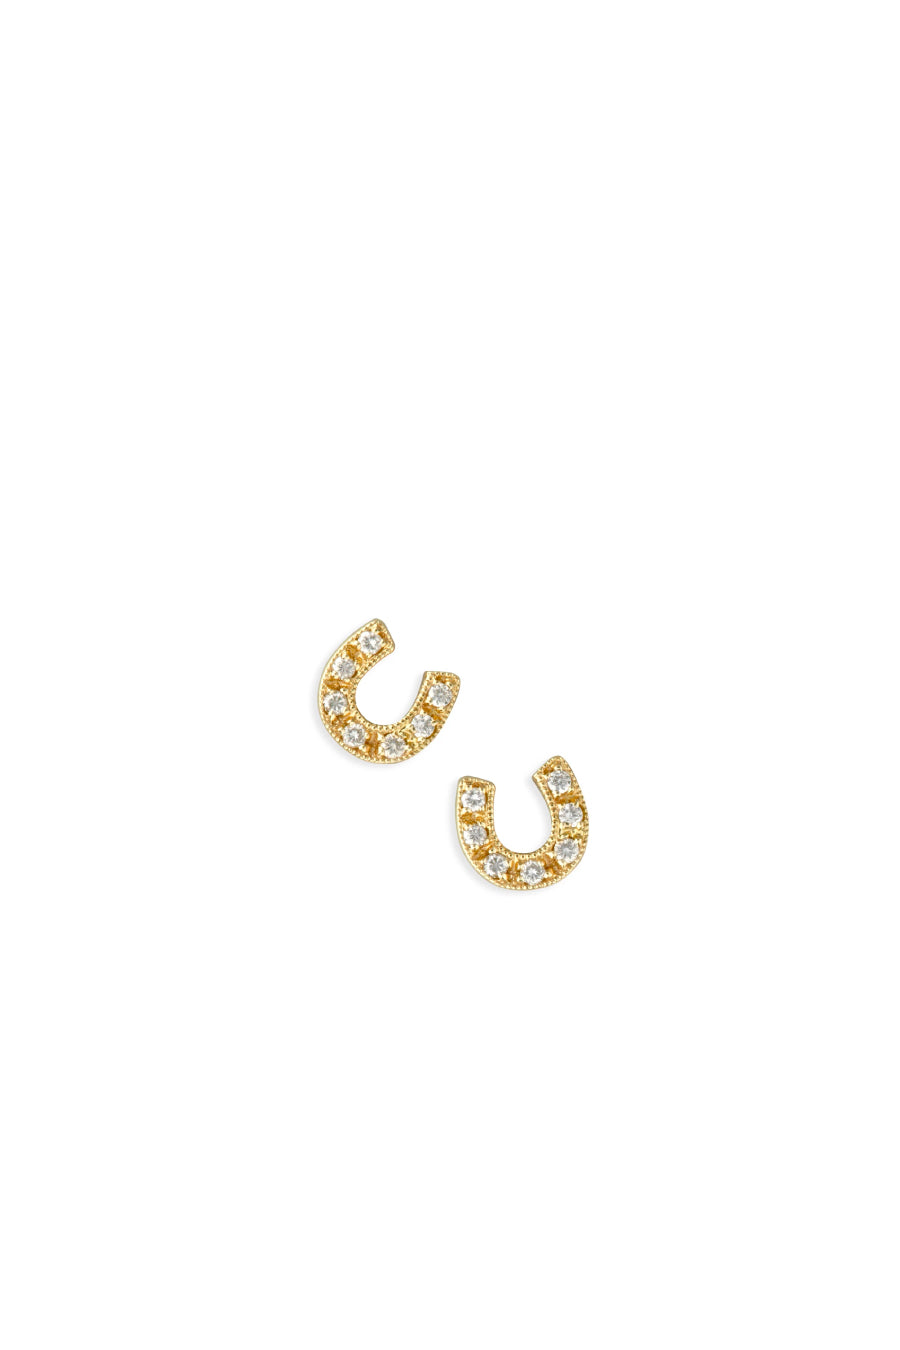 Sydney Evan Pave Horseshoe Stud Earrings - Yellow Gold